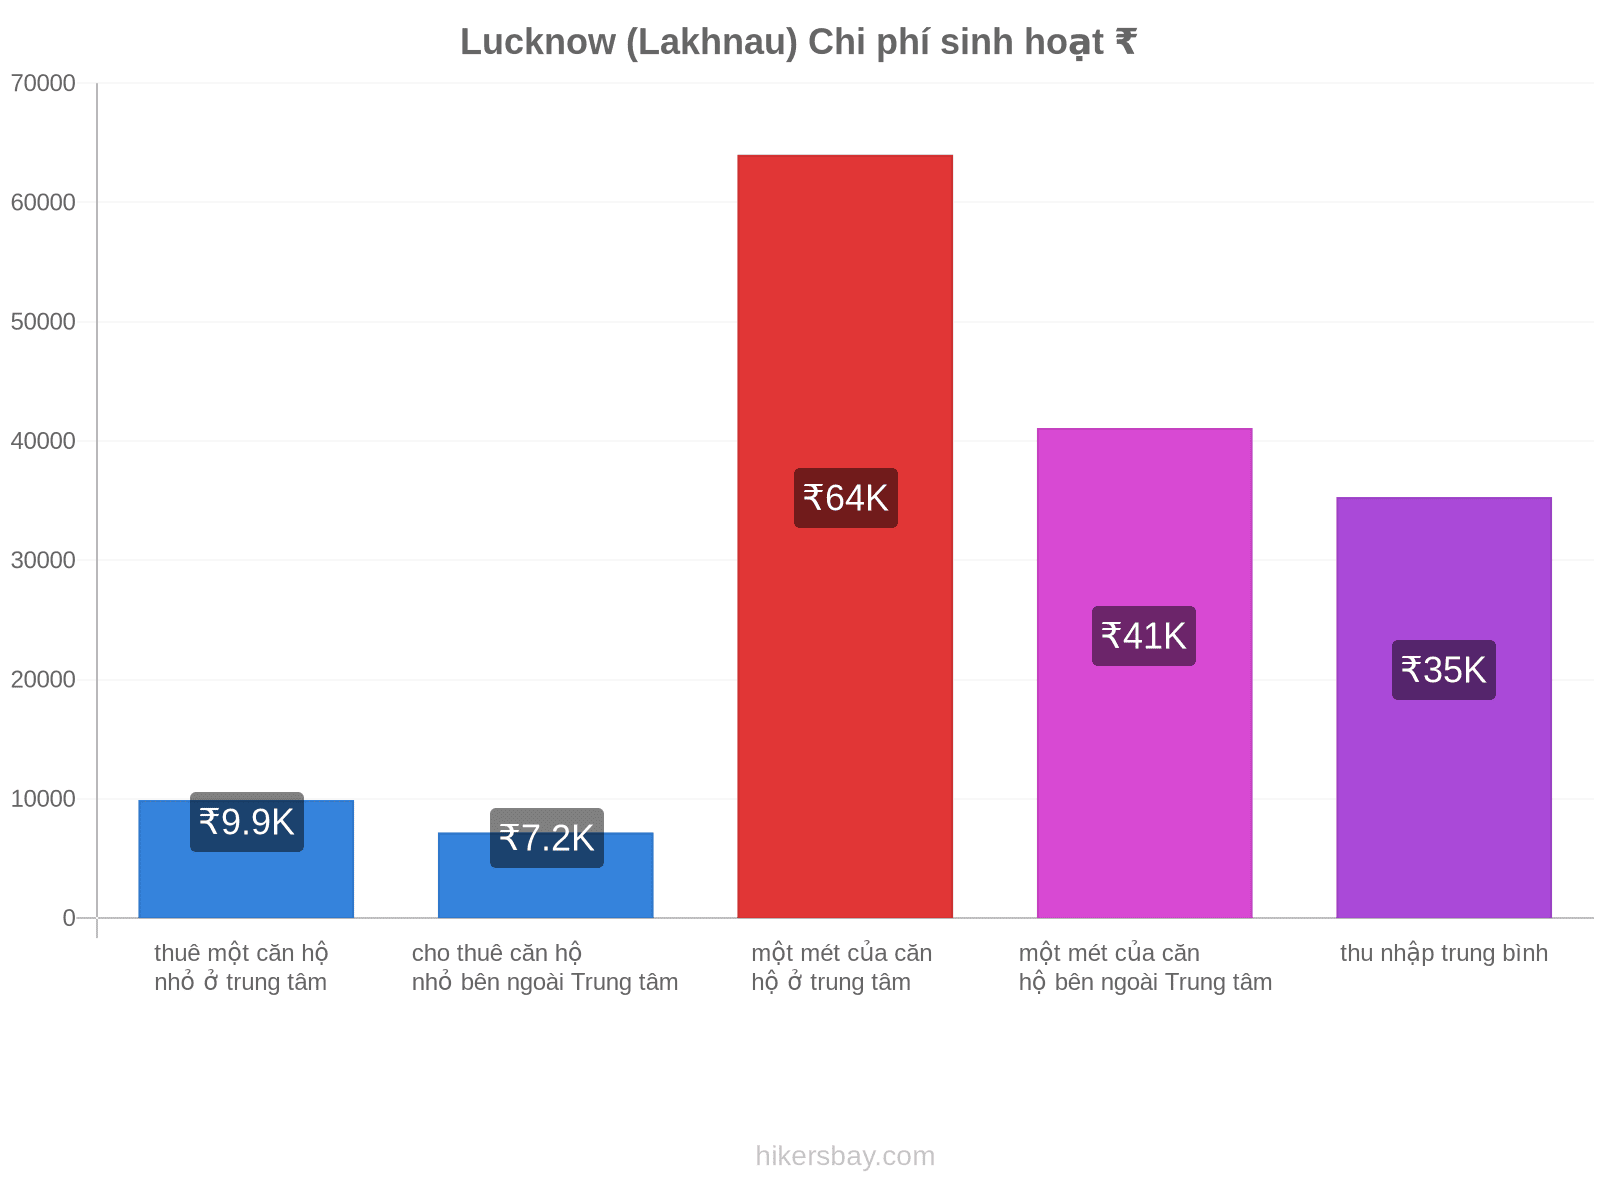 Lucknow (Lakhnau) chi phí sinh hoạt hikersbay.com